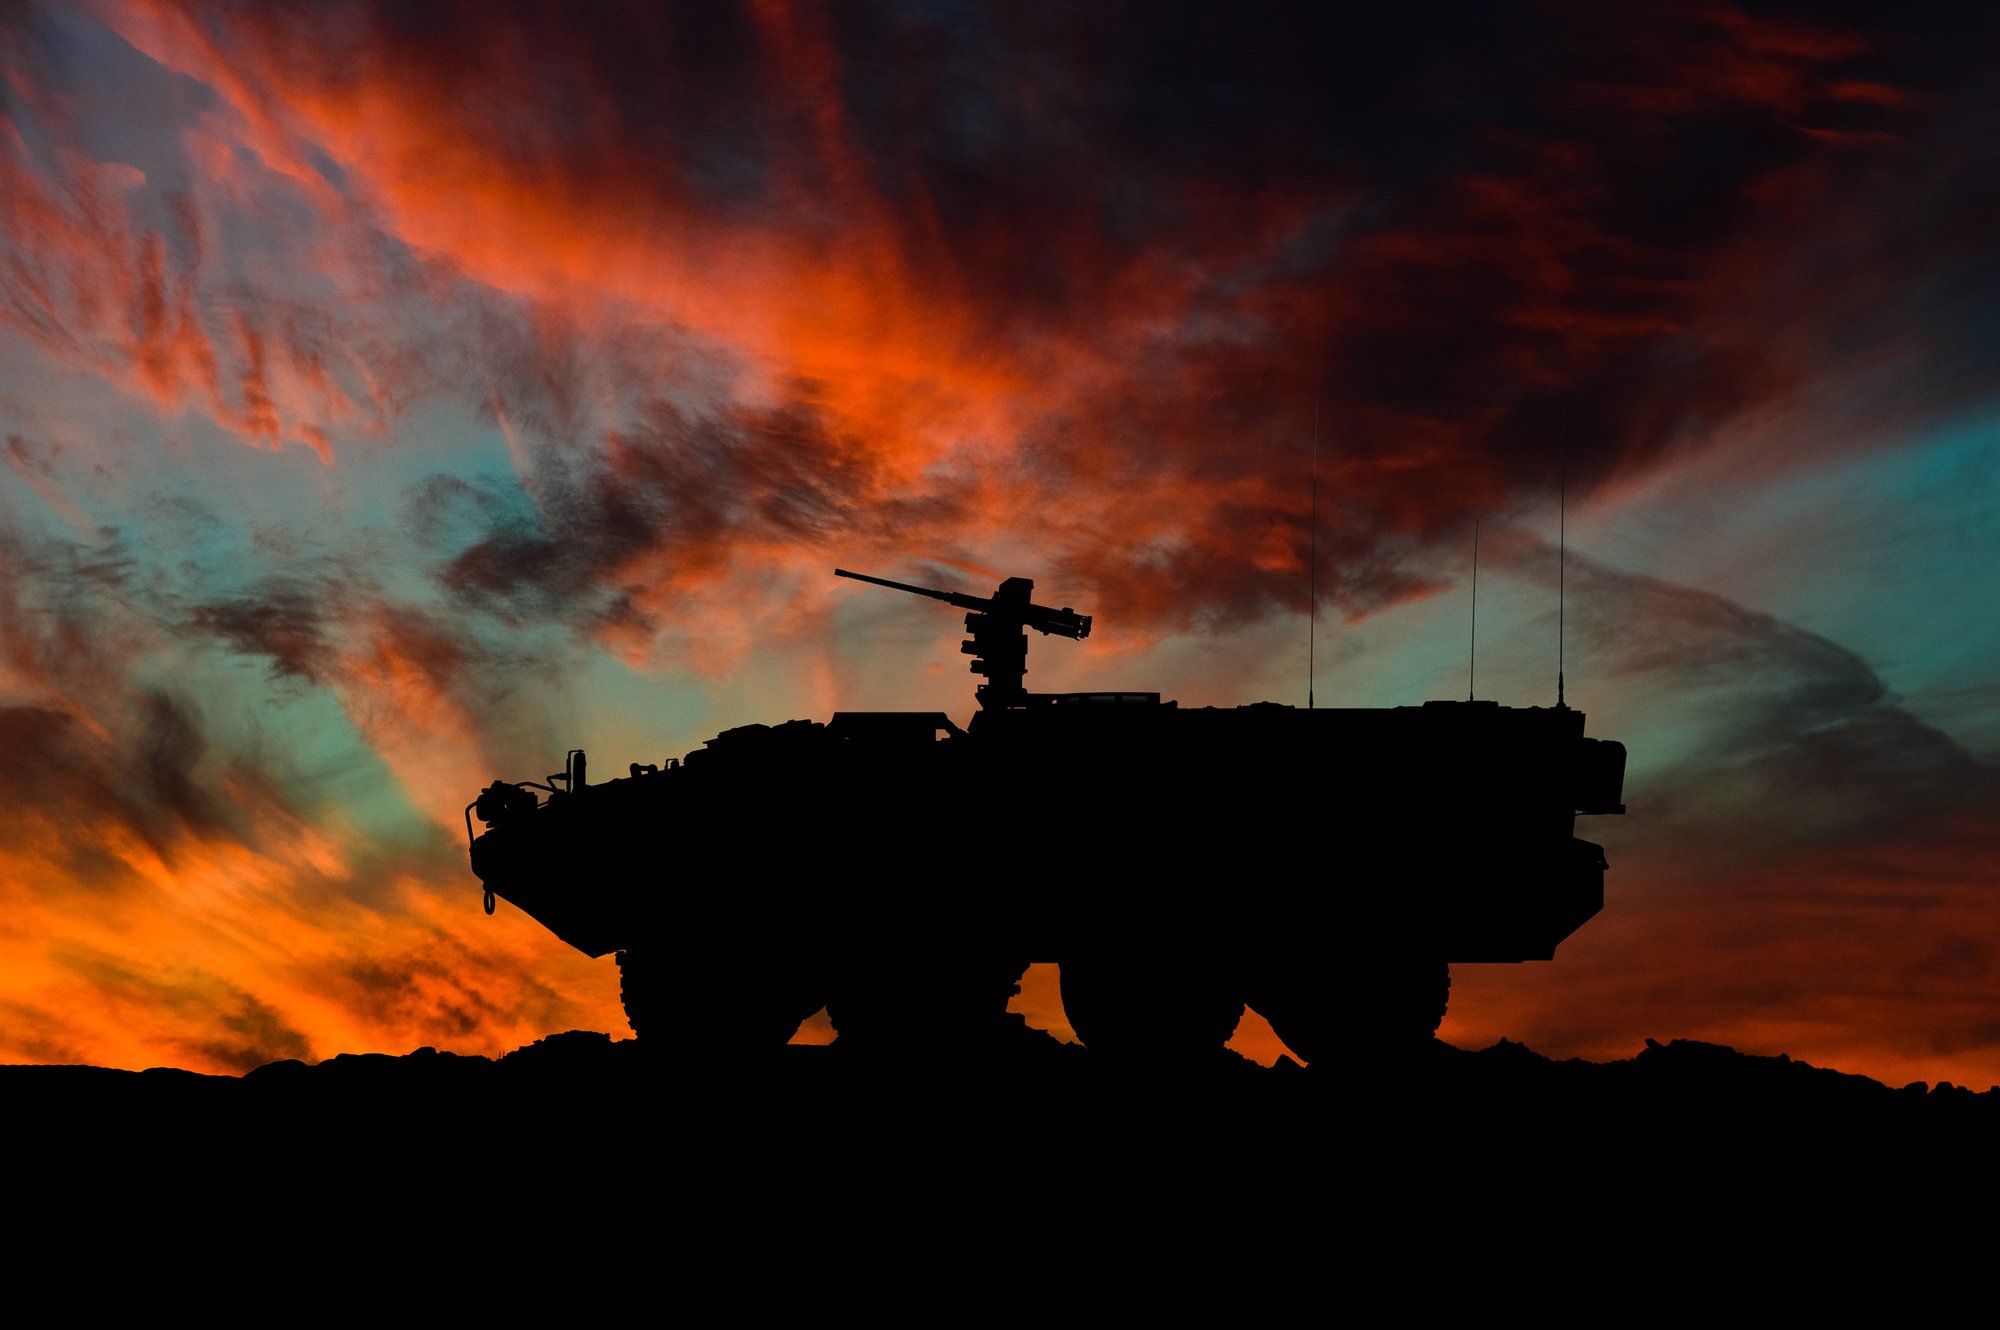 American interim armored vehicle silhouette / 3d illustration, combat shitting